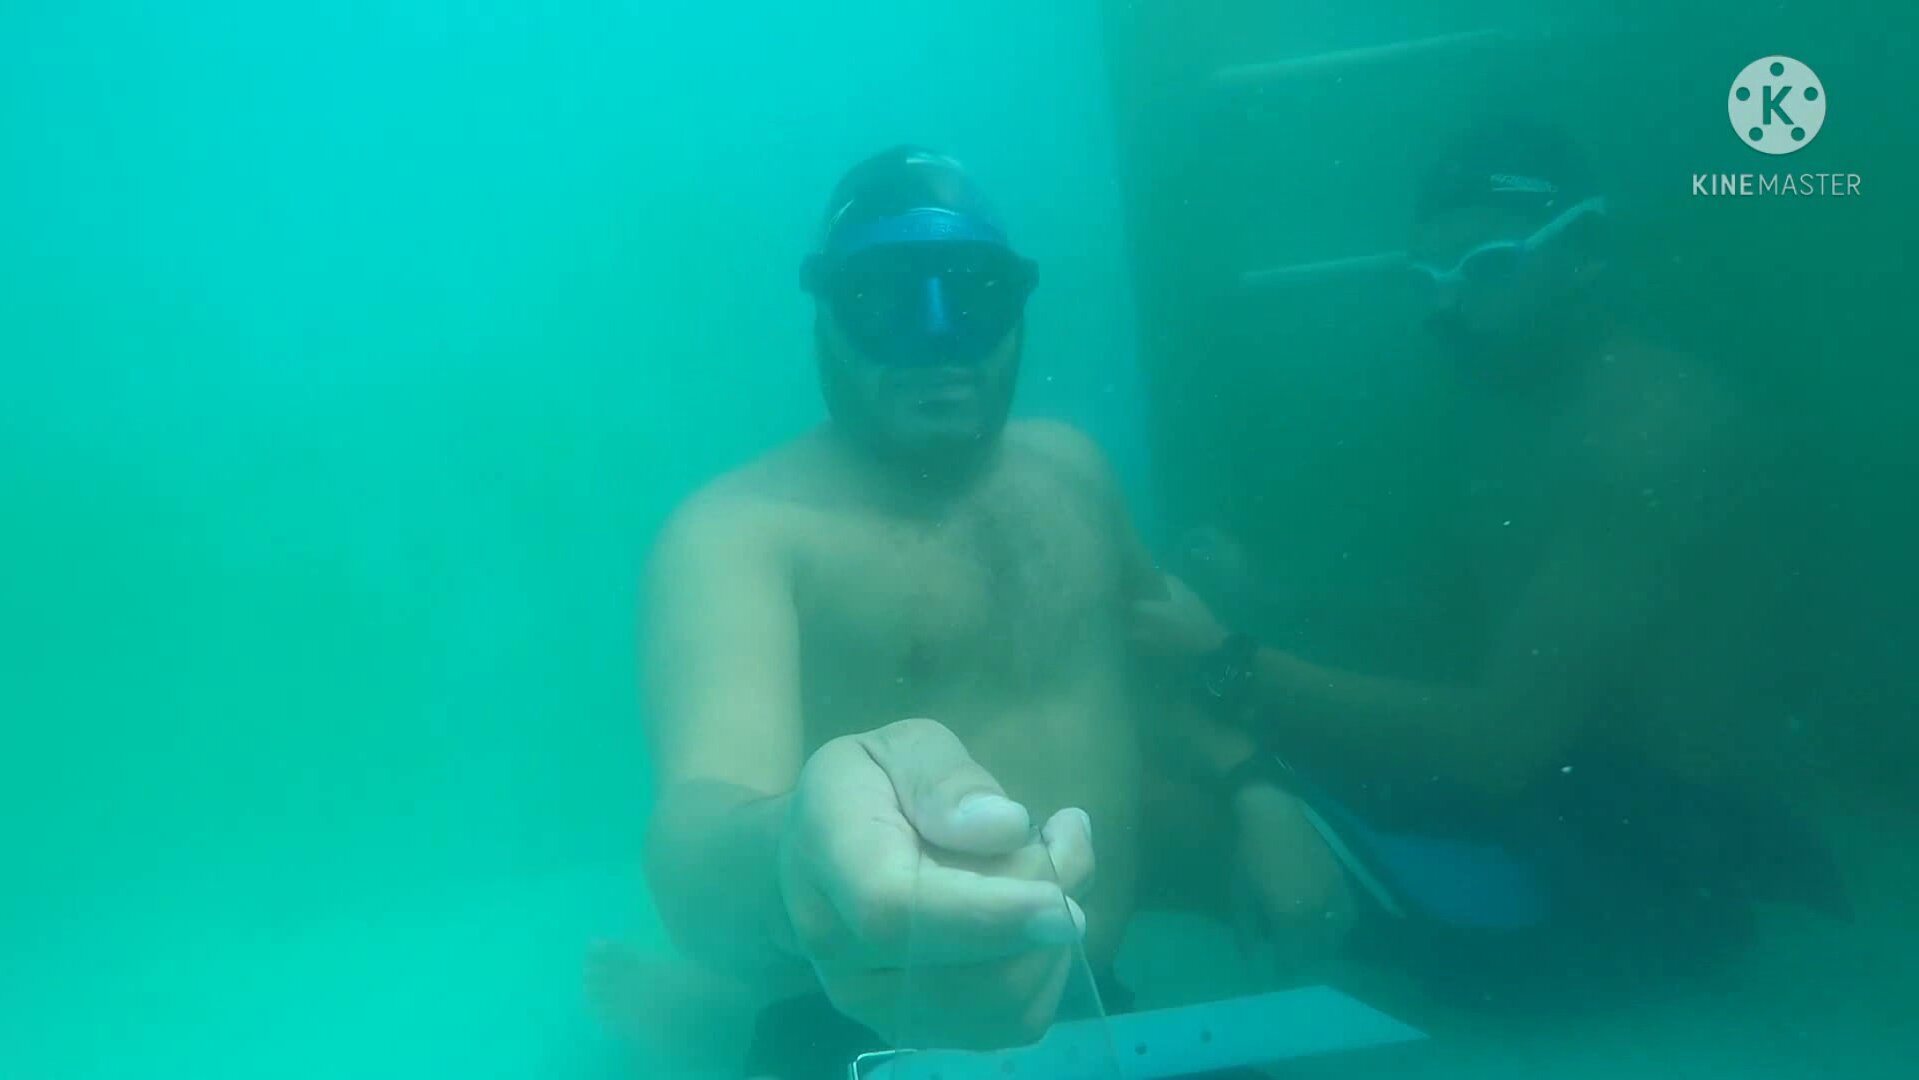 Kareem and friend breatholding again underwater